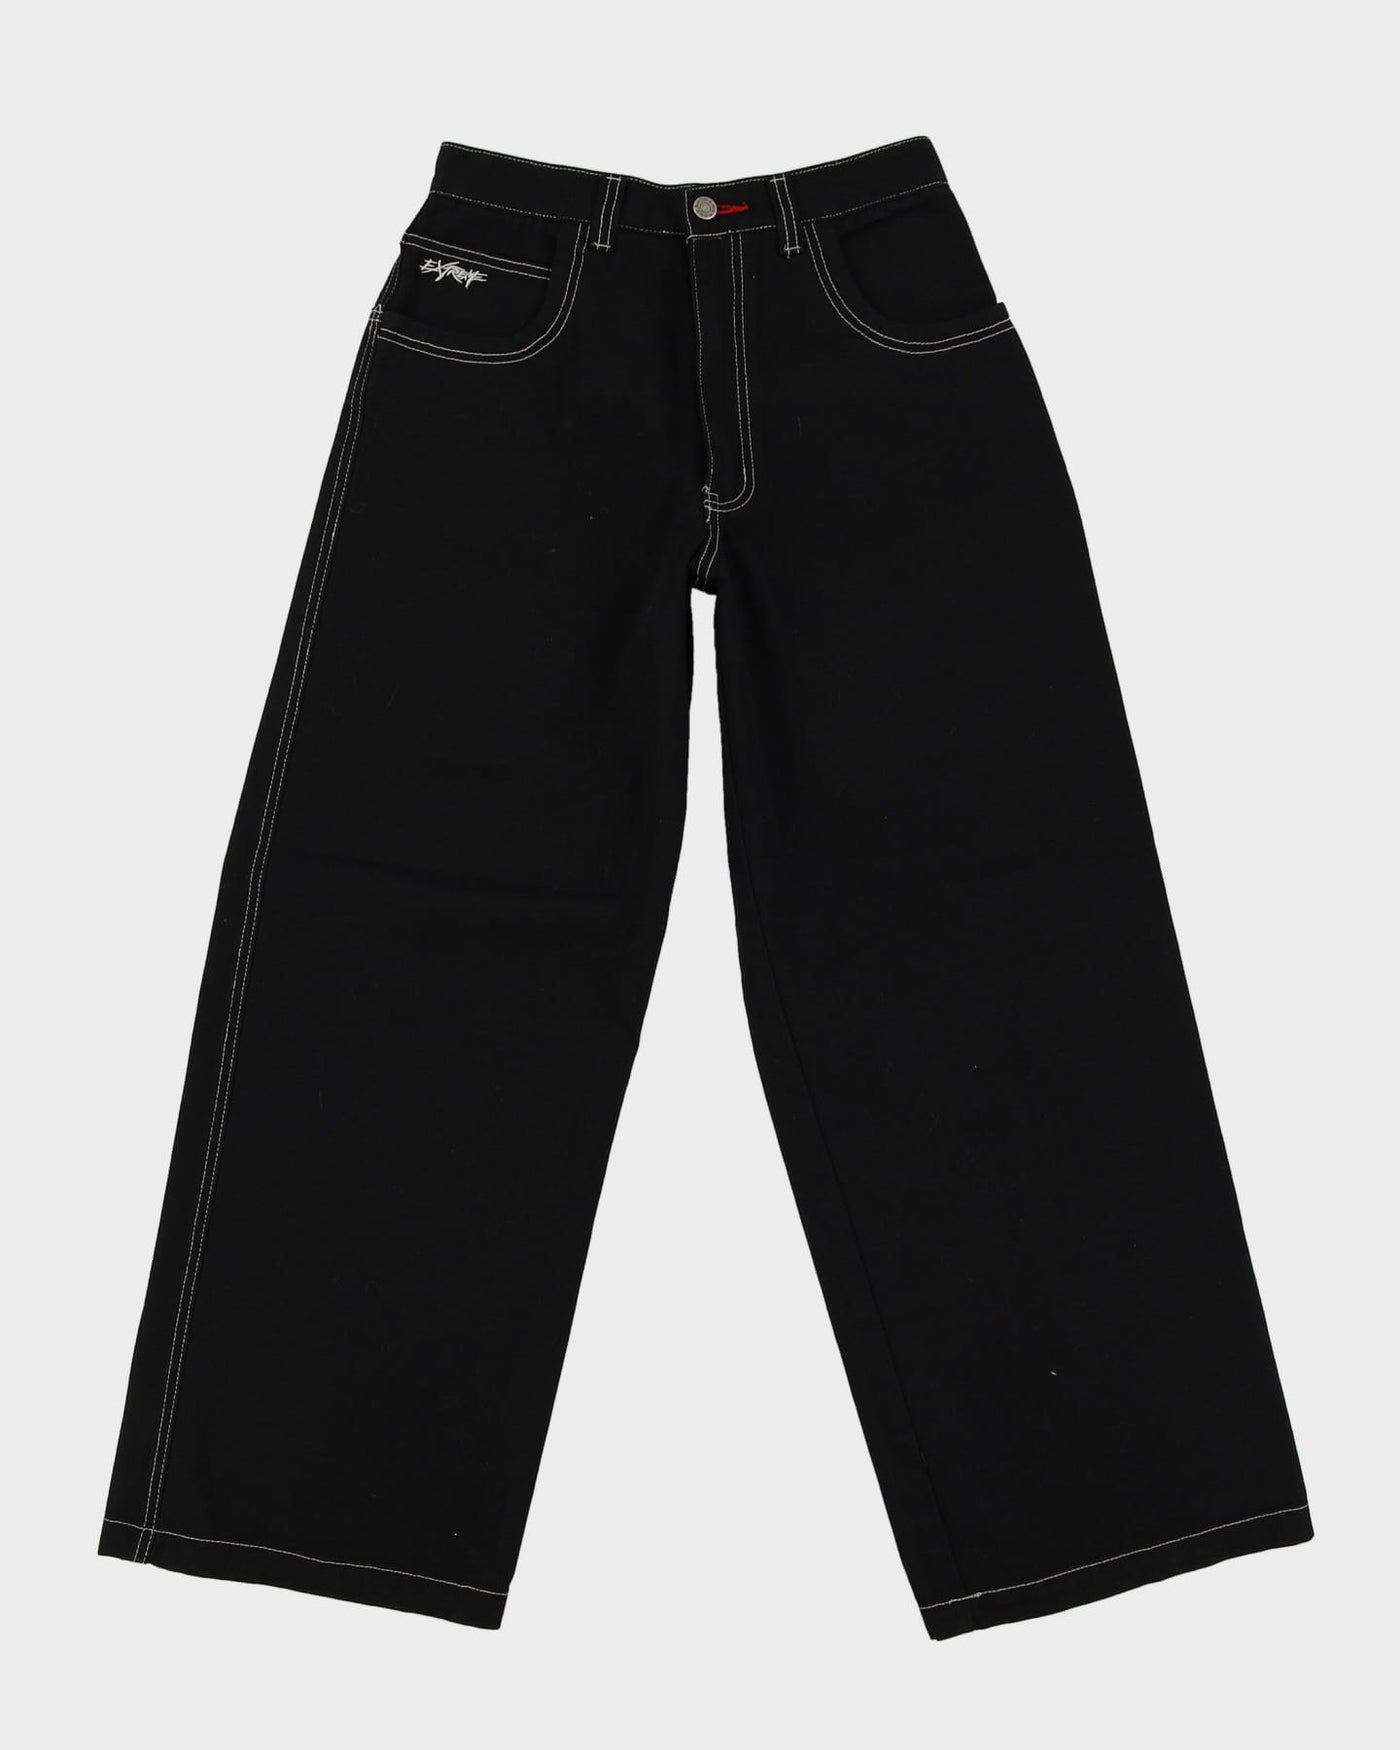 00s Y2K Extreme Zone Black Baggy Oversized Contrast Stitch Jeans - W27 L29